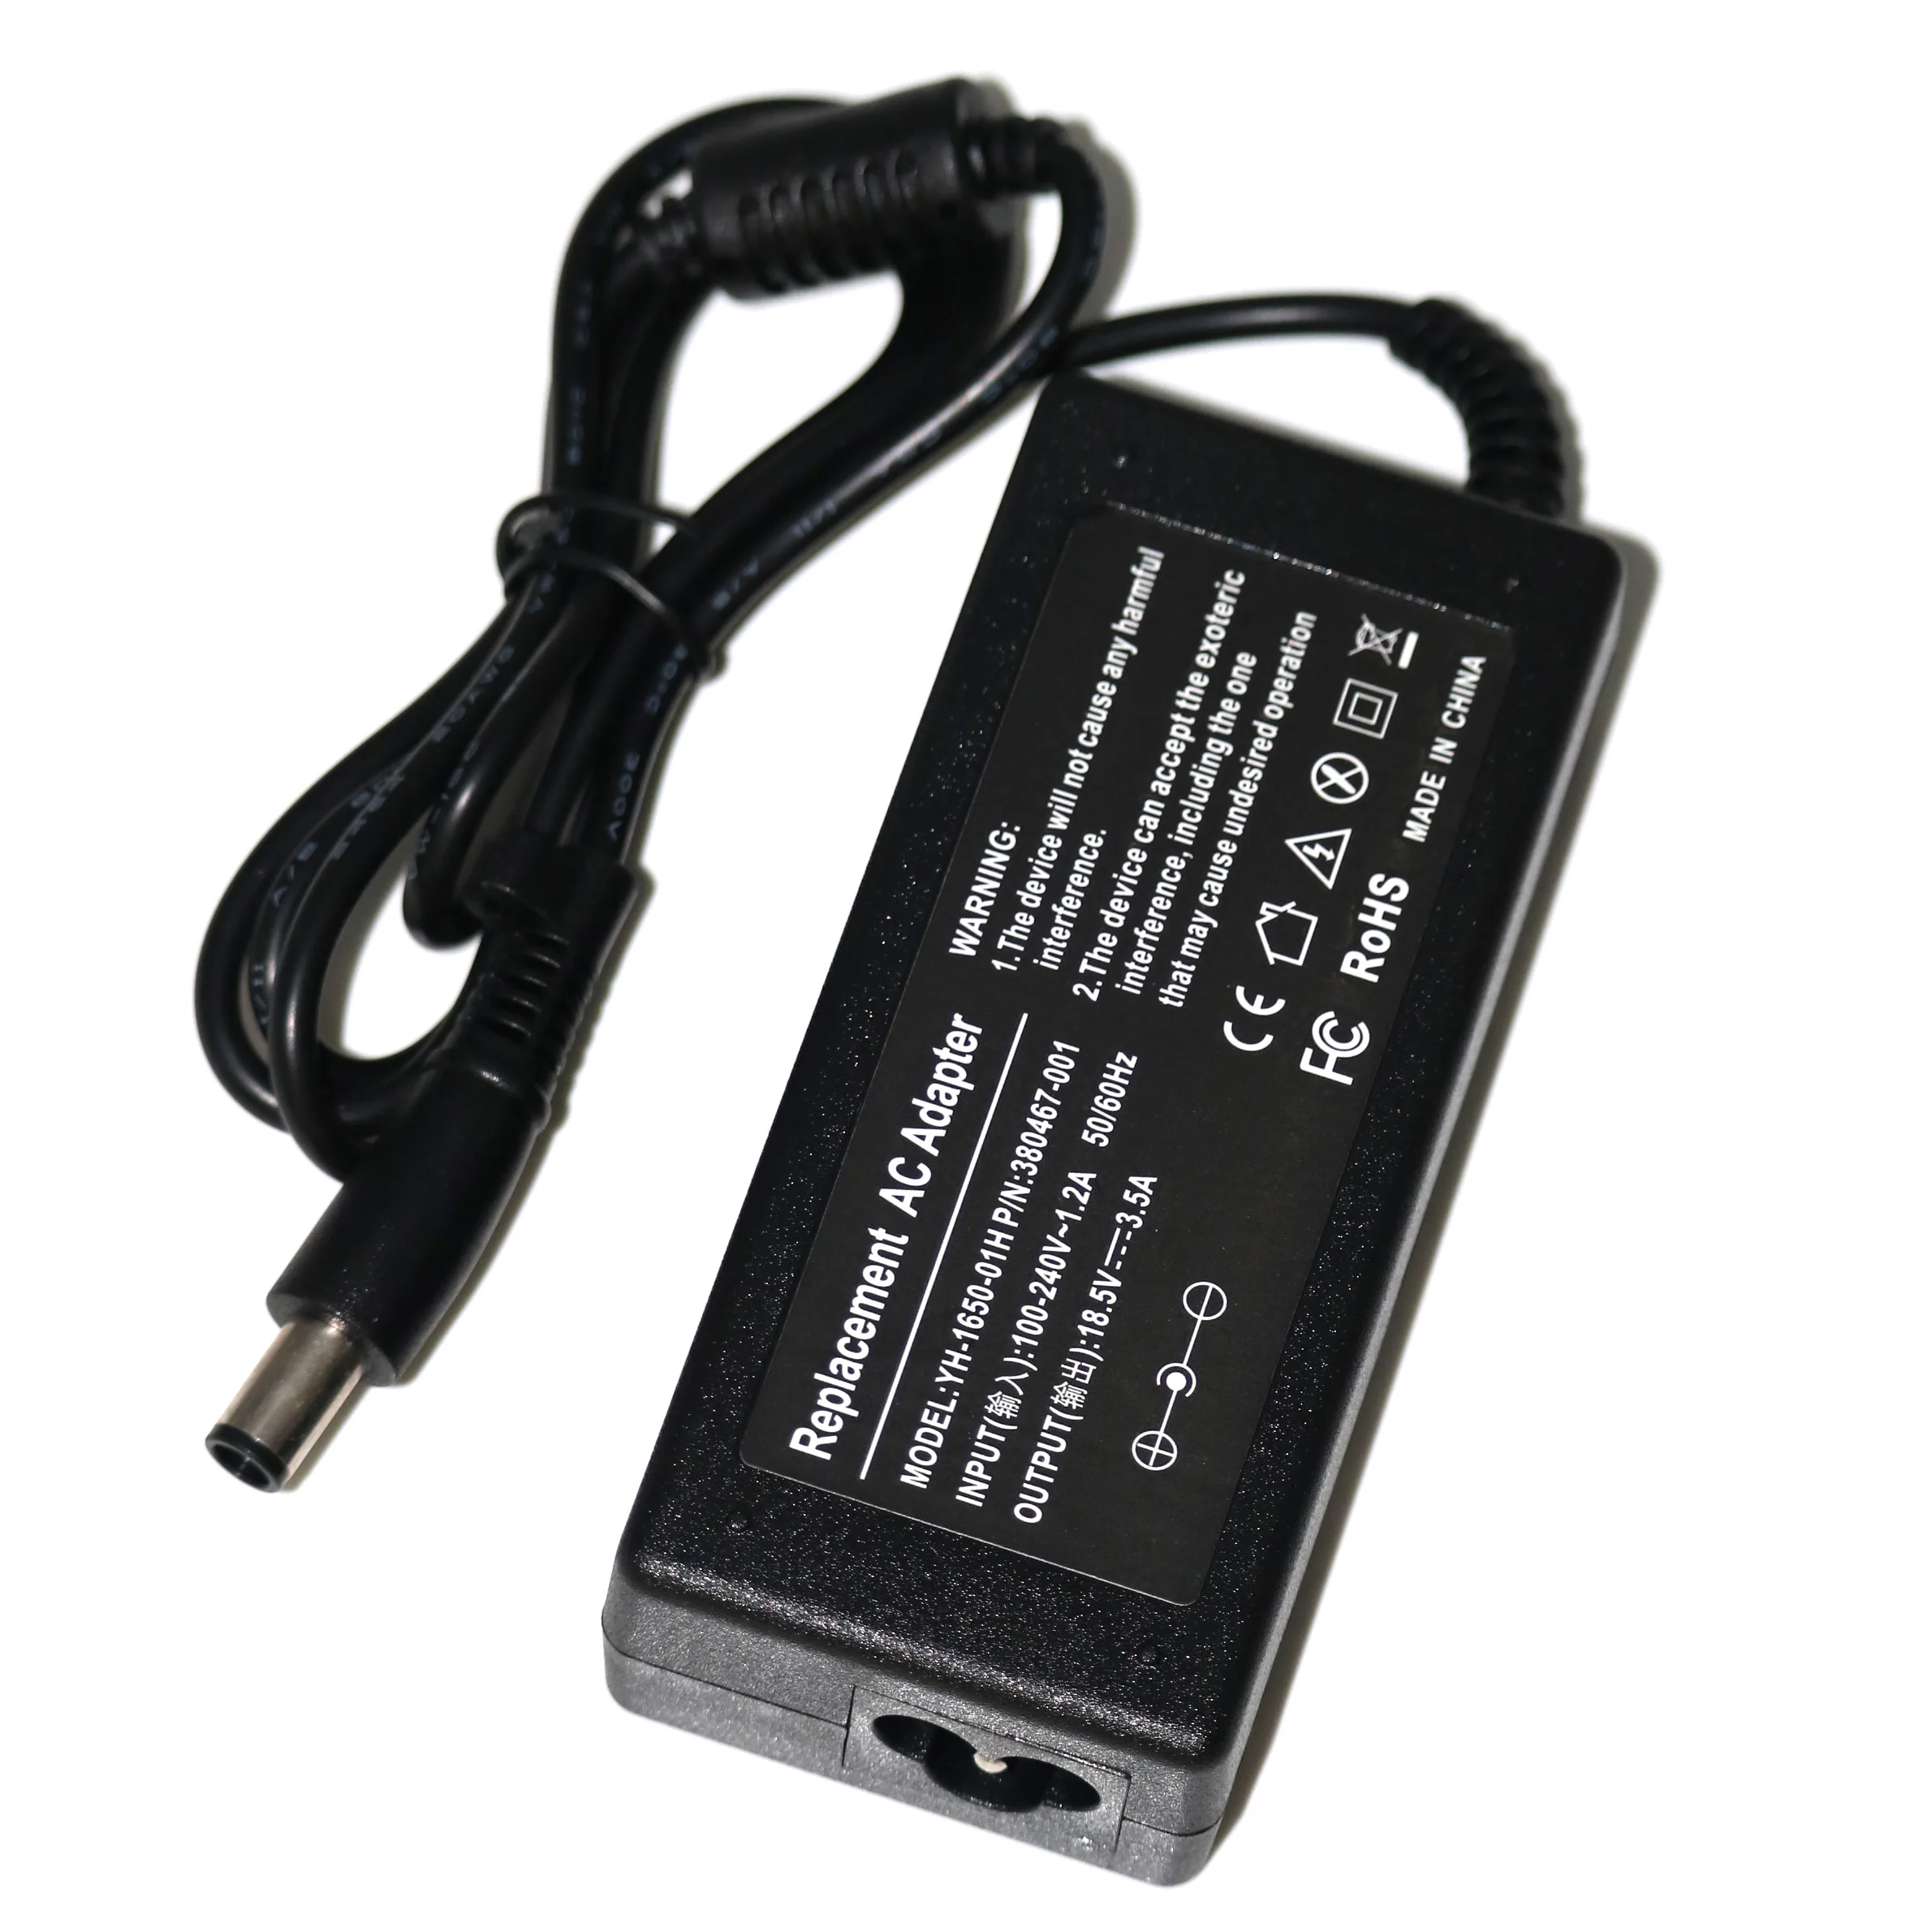 

18.5V 3.5A 65W AC Power Adapter Battery Charger for Compaq Presario CQ57 CQ60 CQ61 CQ70 CQ71 CQ81 Laptop